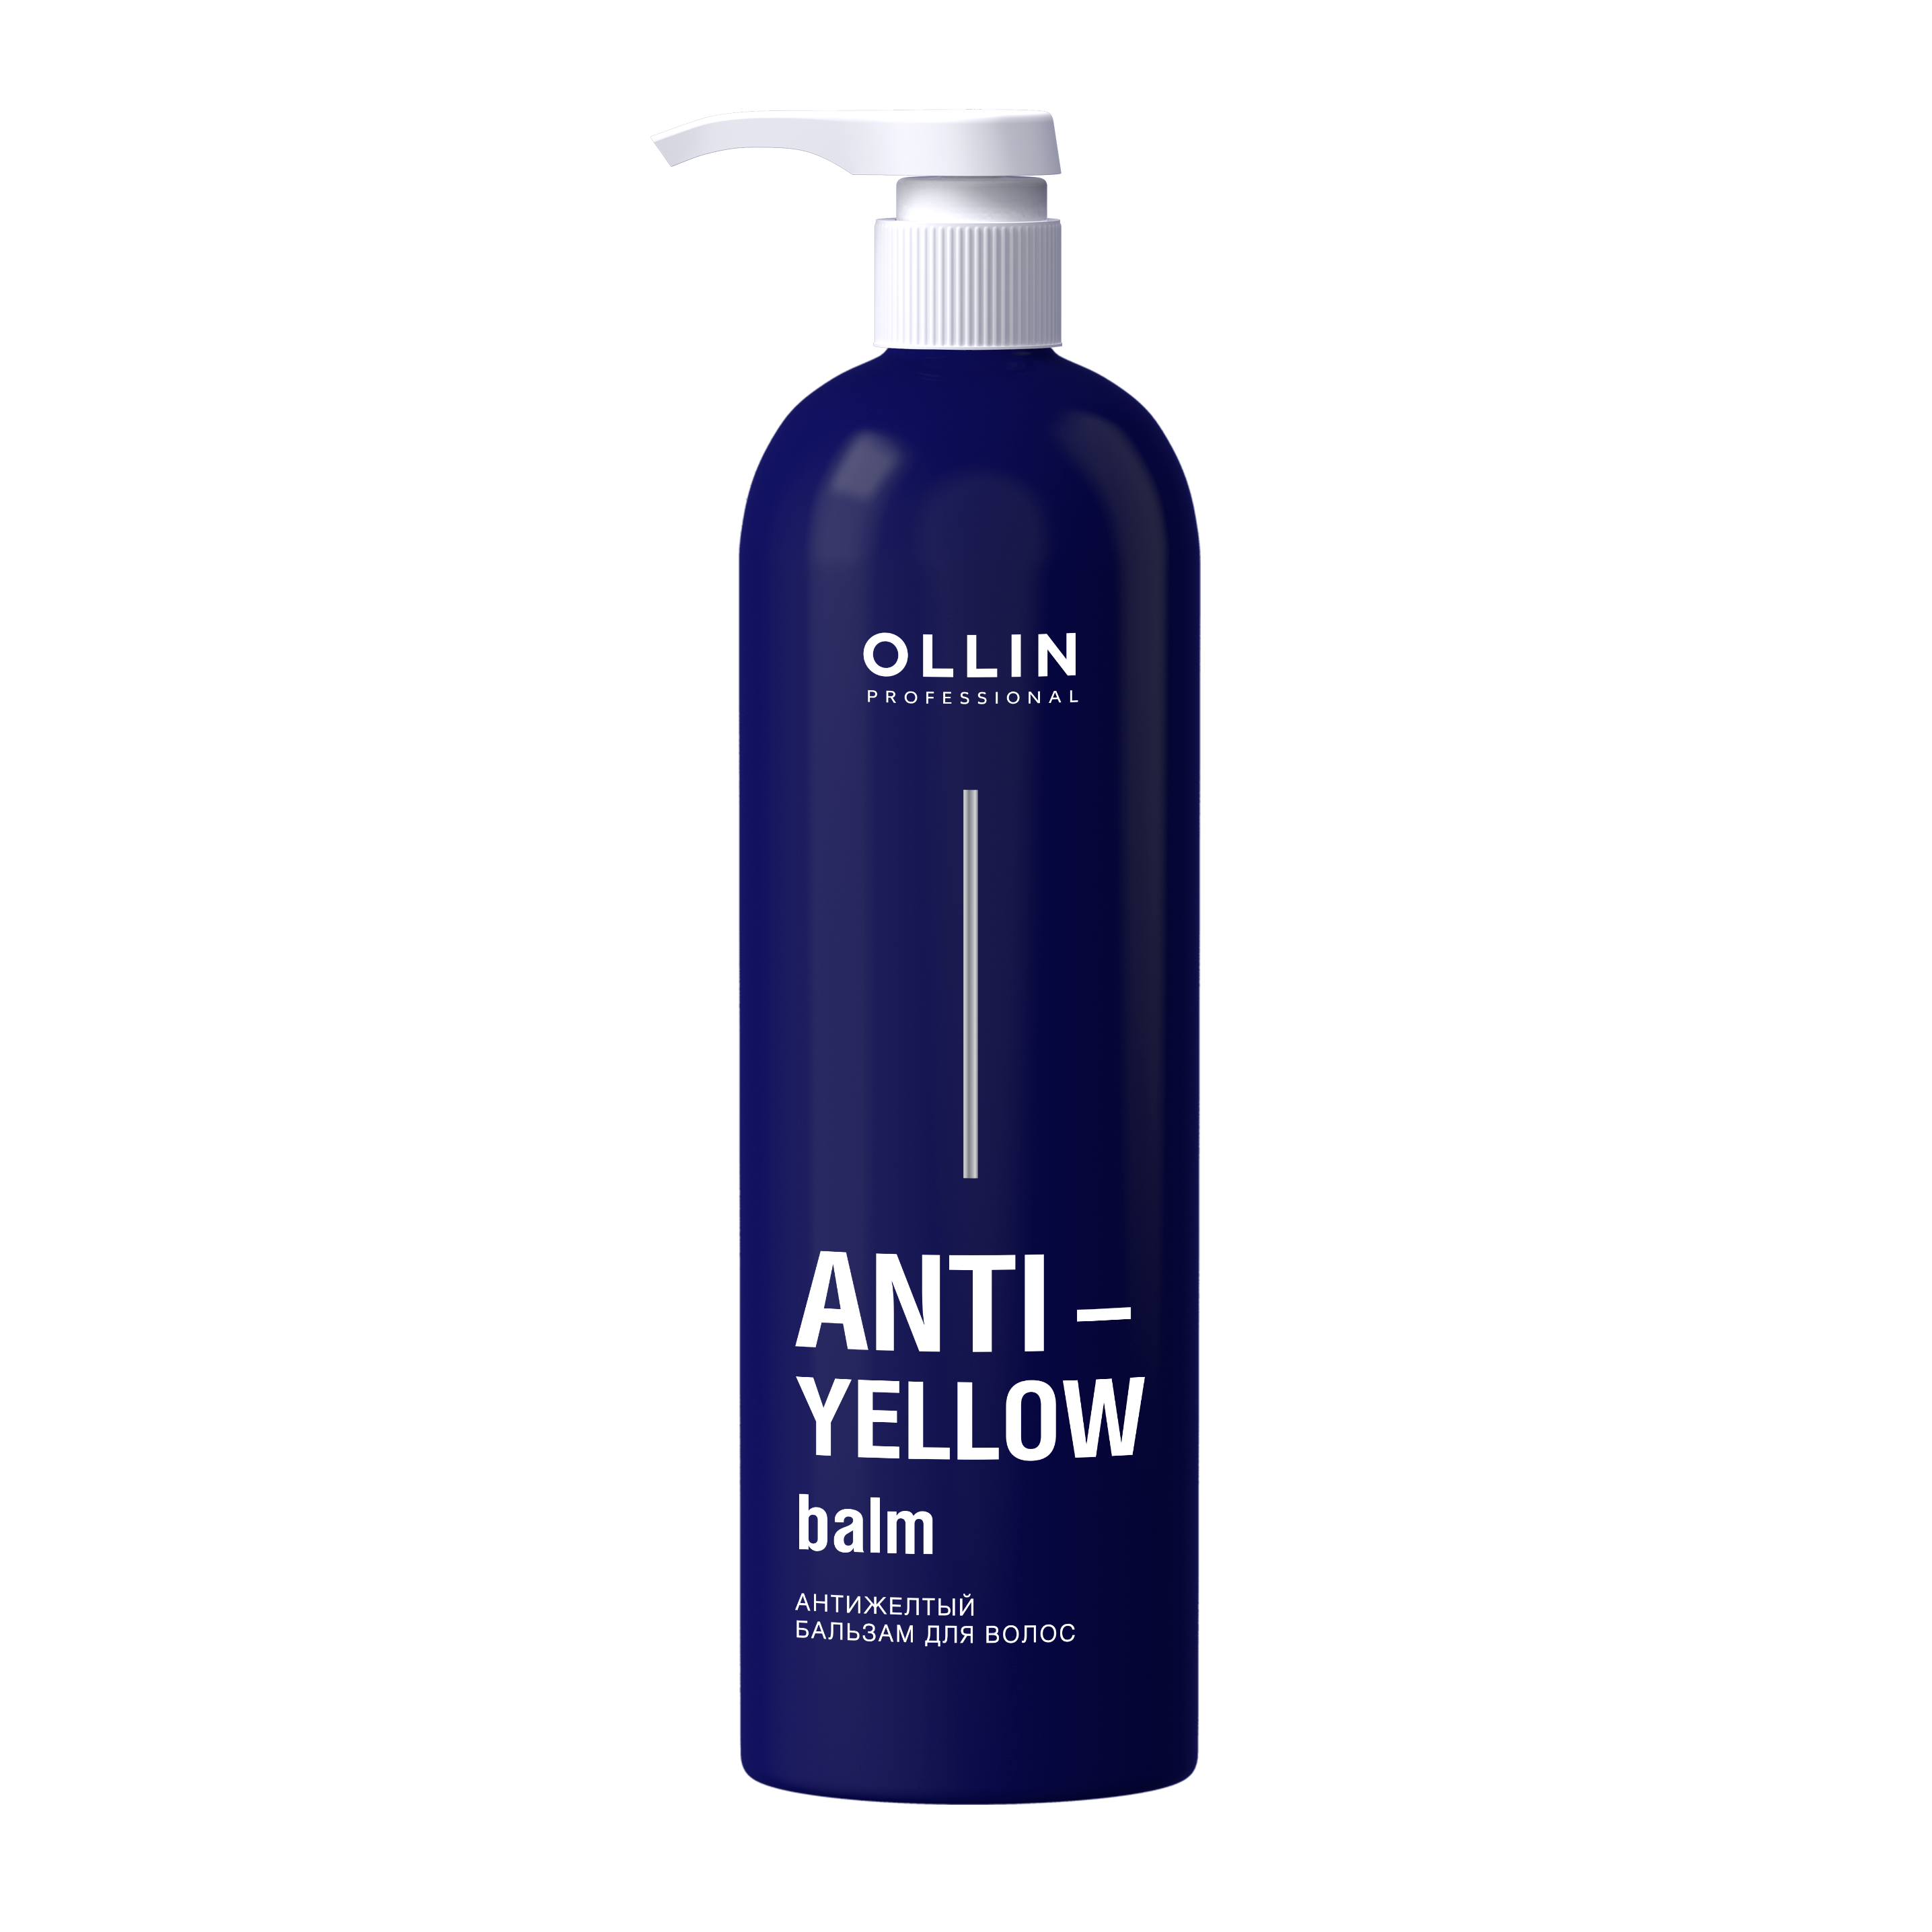 OLLIN, Антижелтый бальзам для волос Anti-Yellow, 500 мл.